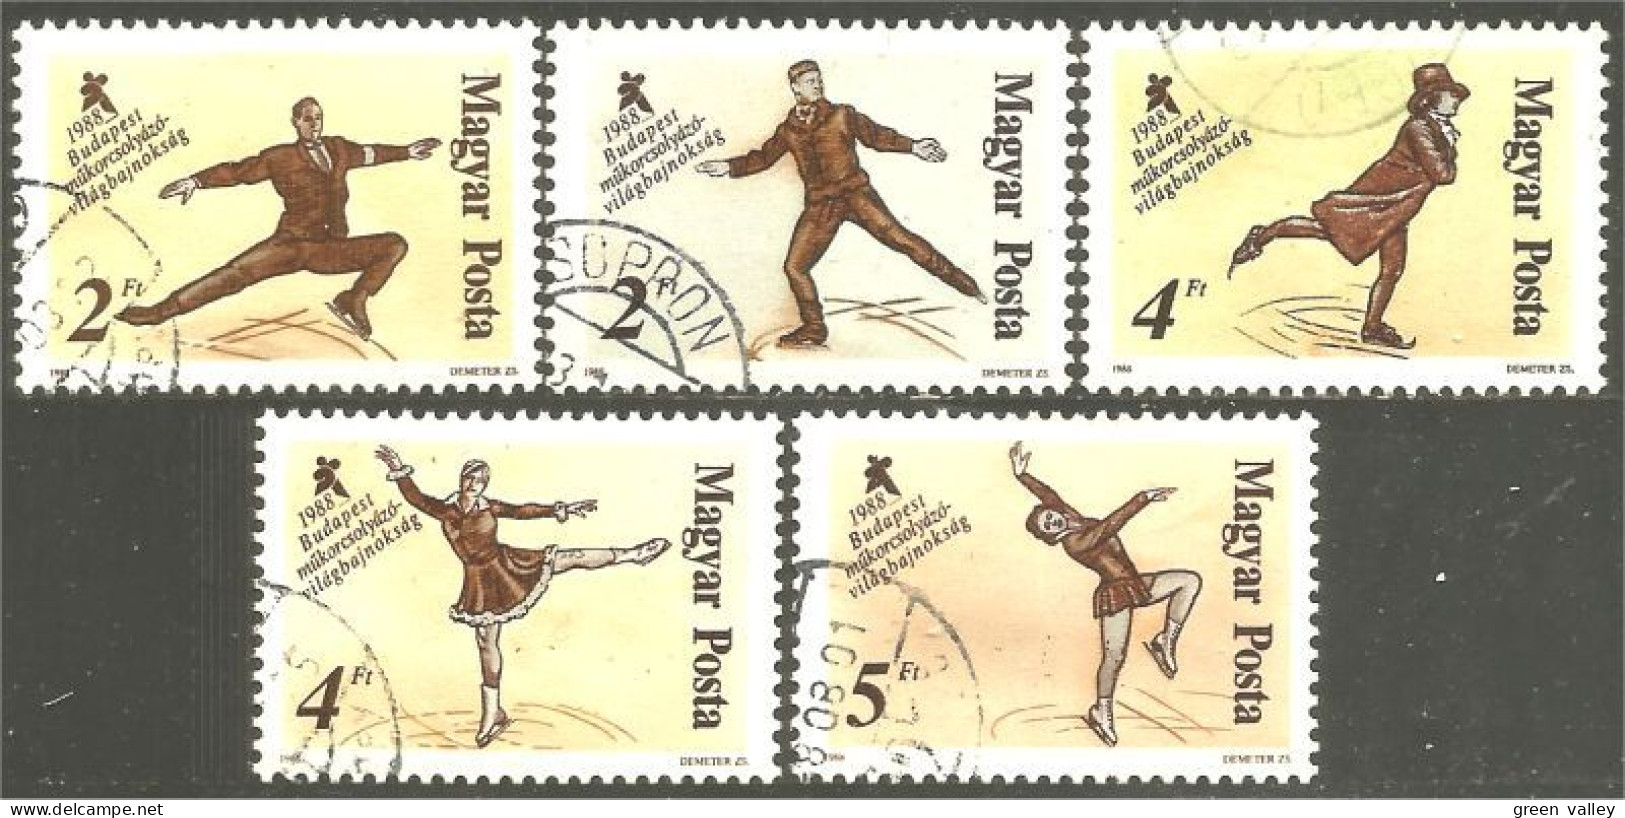 494 Hongrie Patinage Artistique Figure Skating Pattinaggio Artistico Eiskunstlauf (HON-169d) - Used Stamps